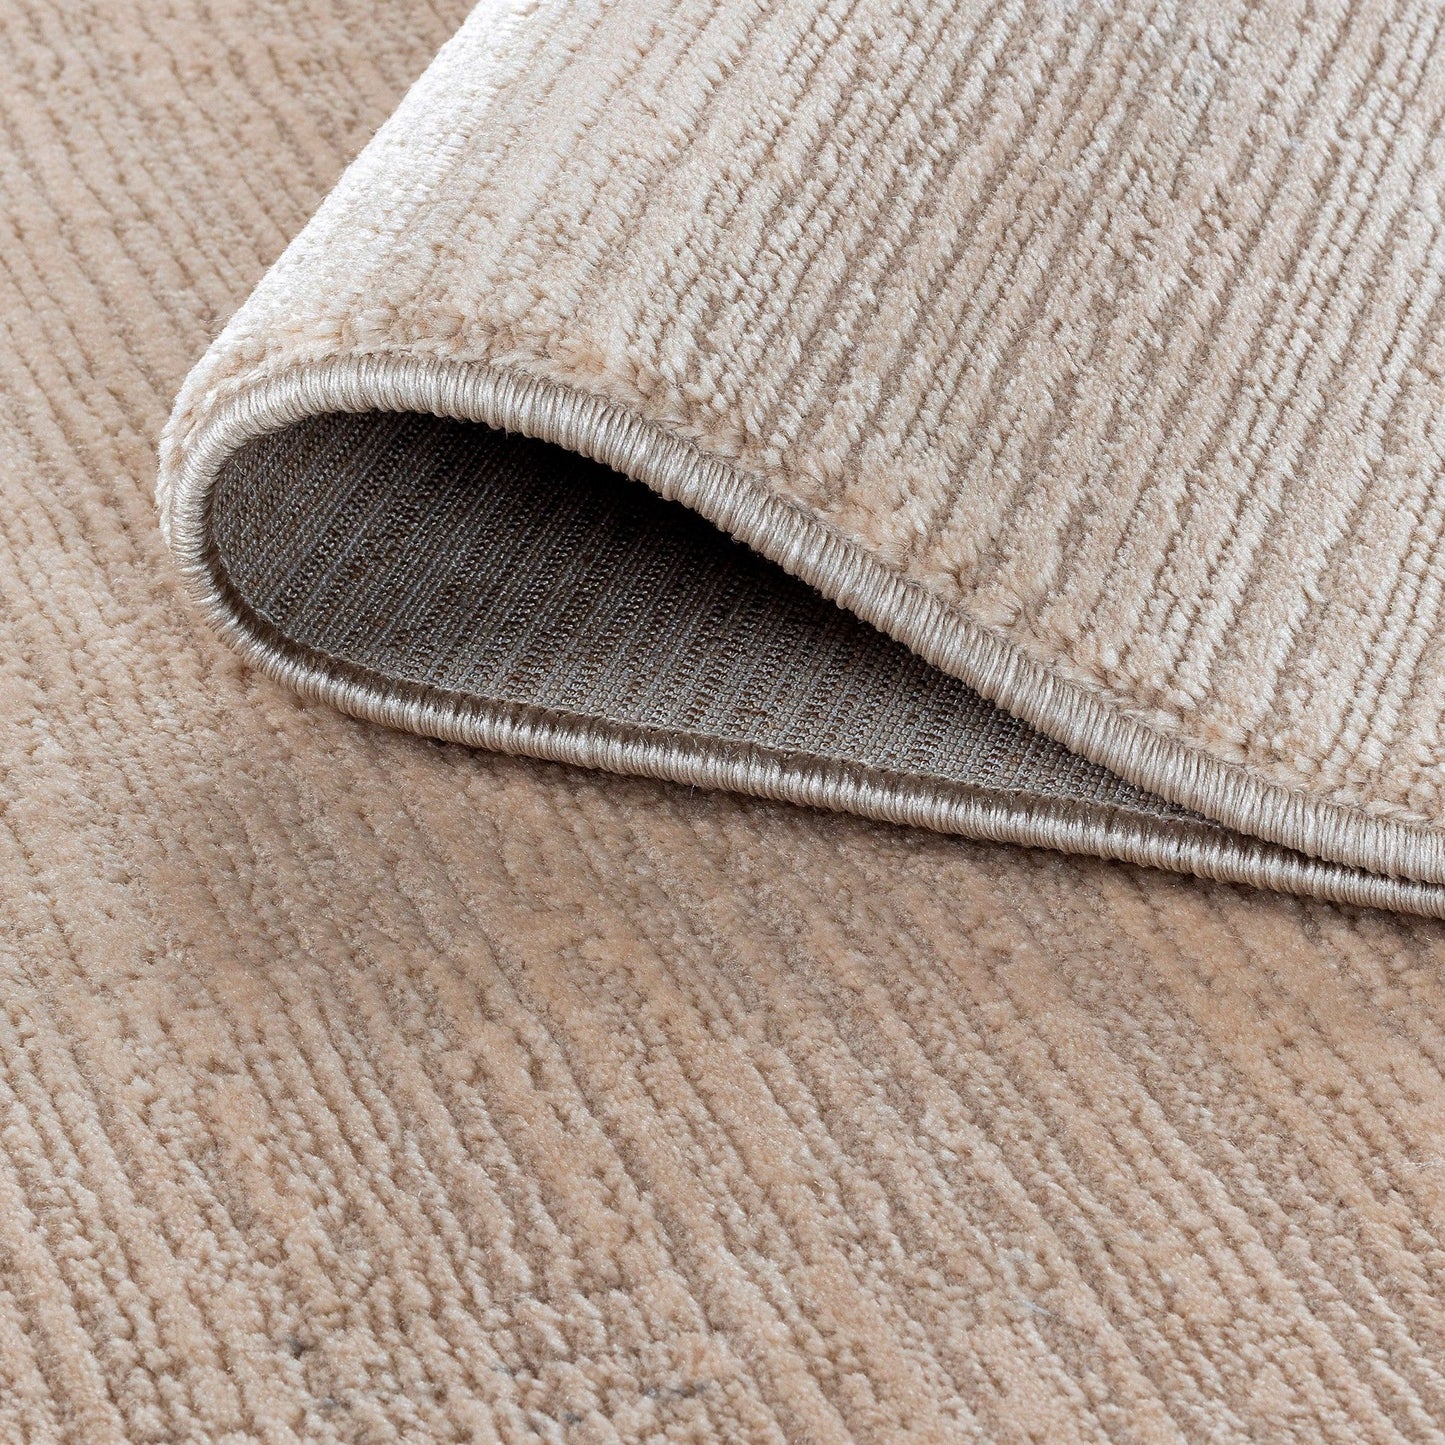 Lima 1050 - Beige - Carpet (160 x 230)